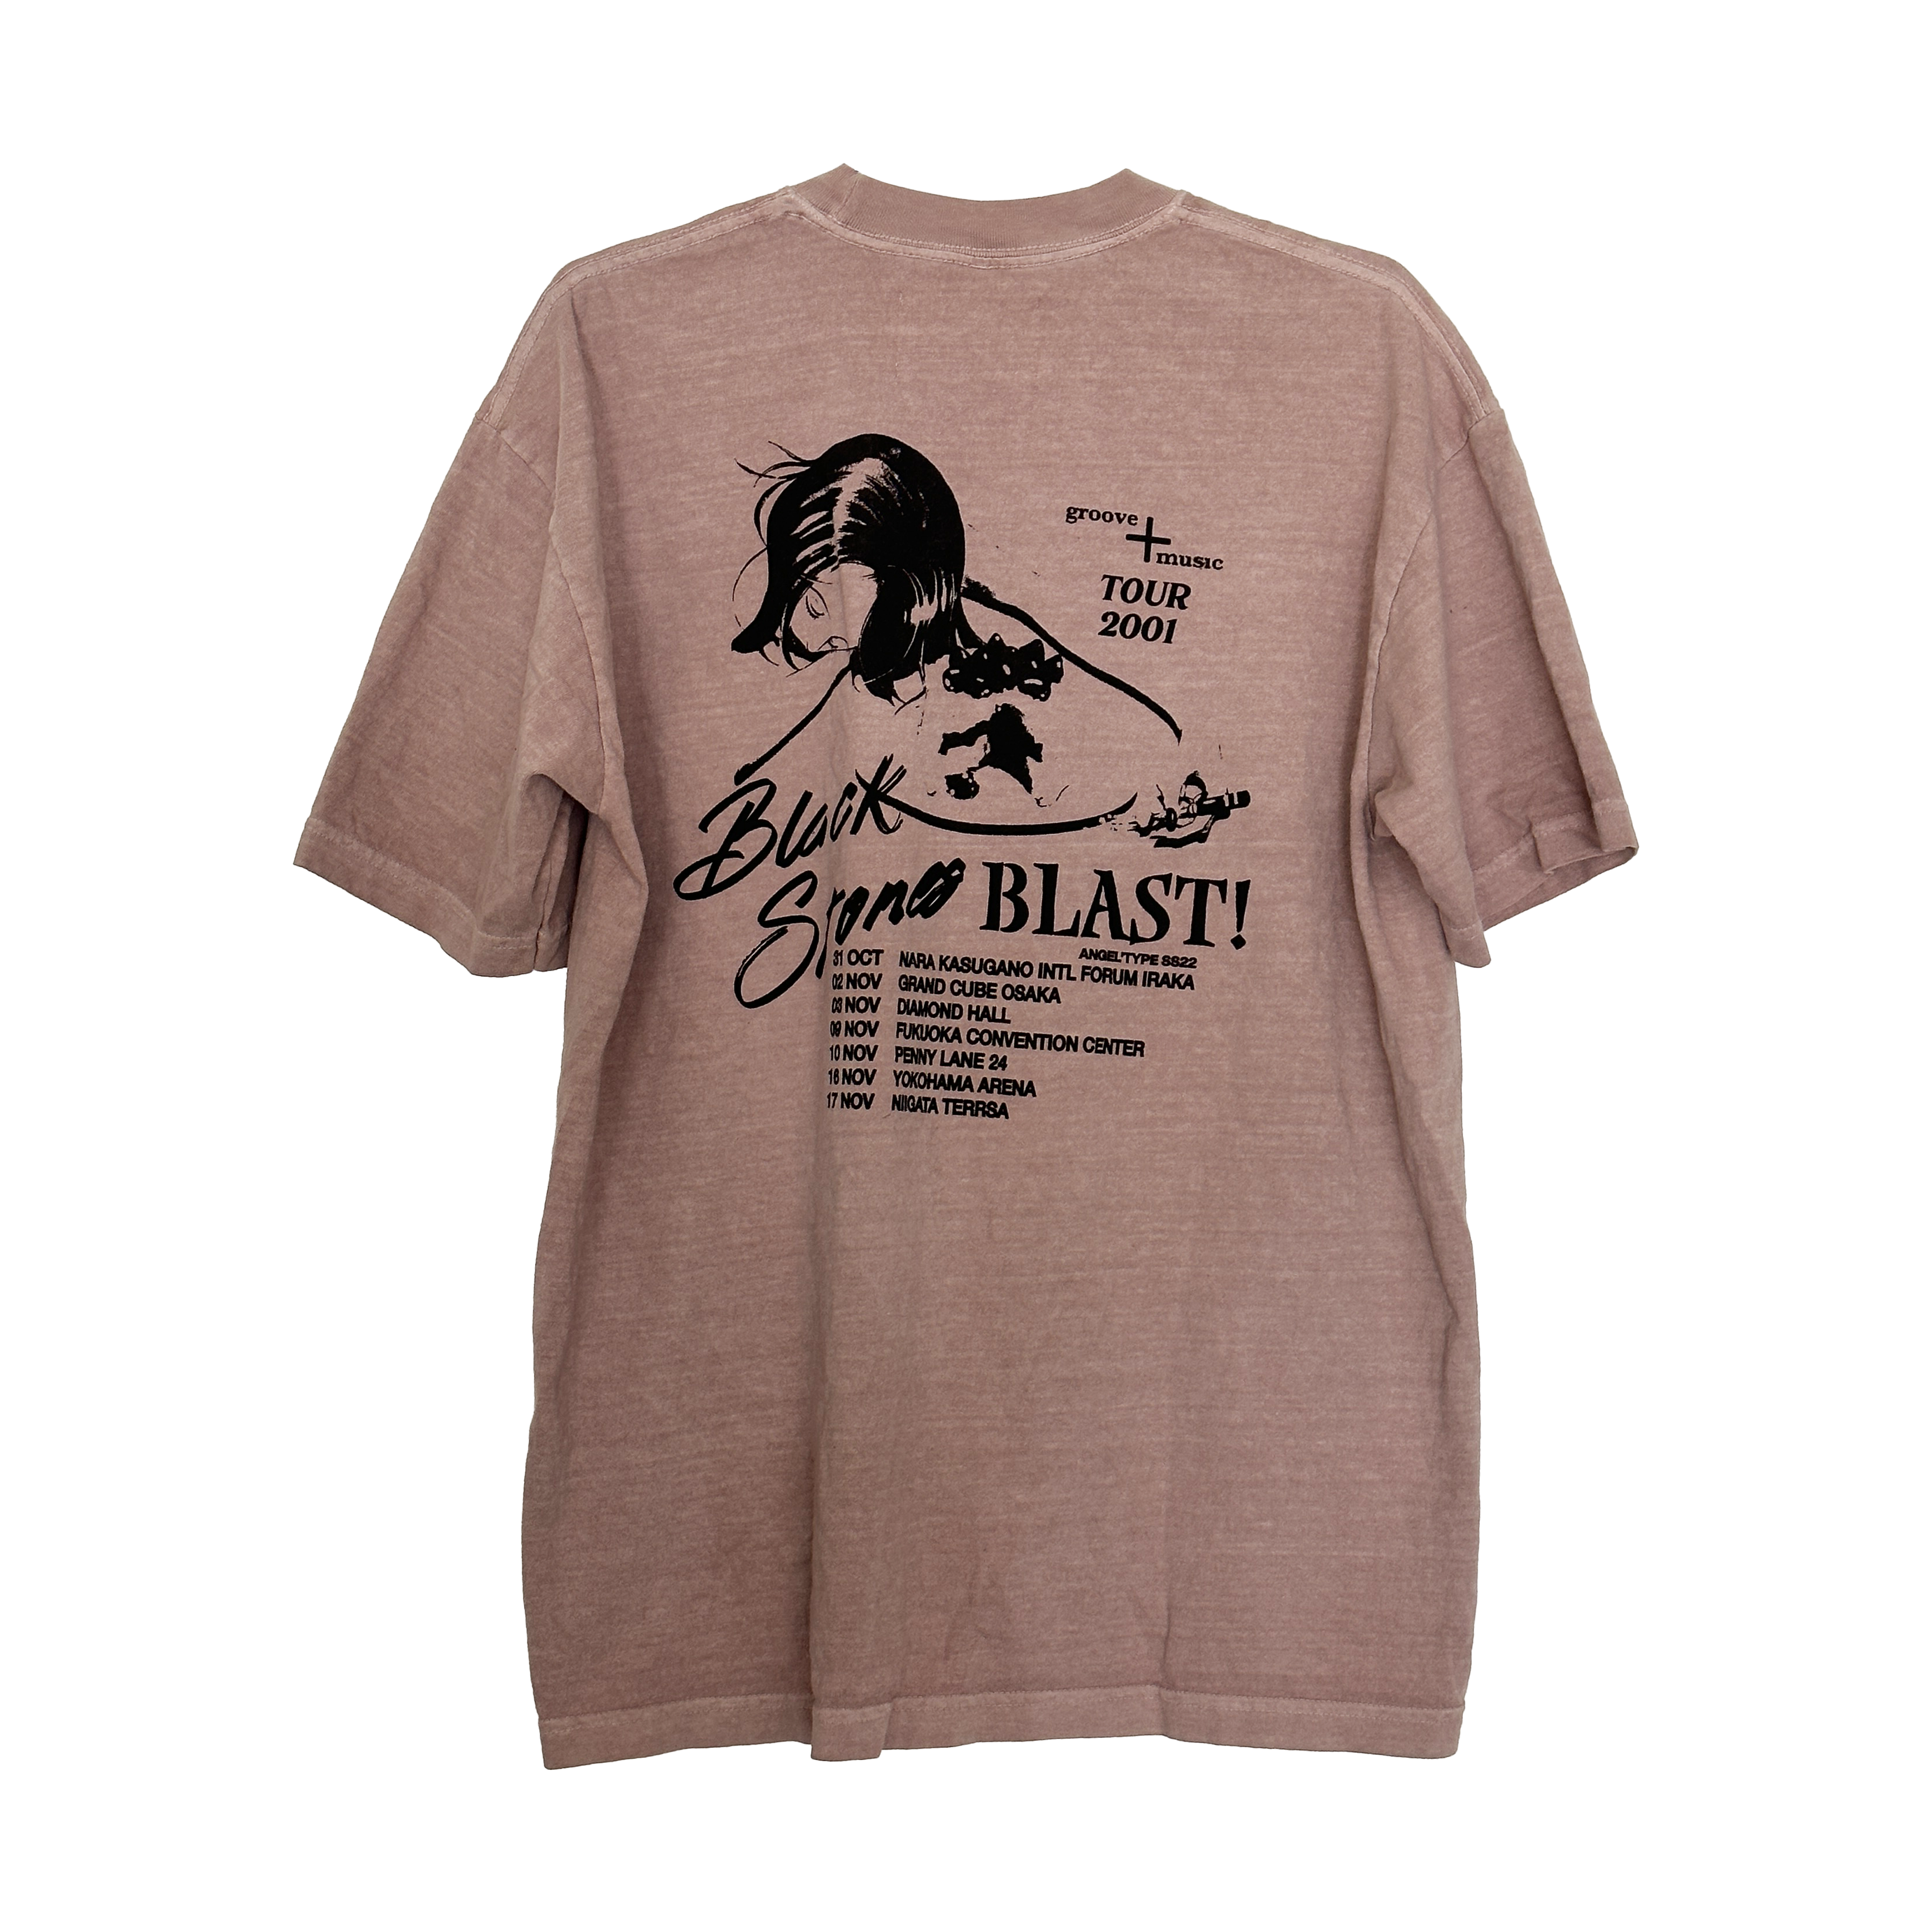 BLACK STONES 2001 TOUR T-Shirt